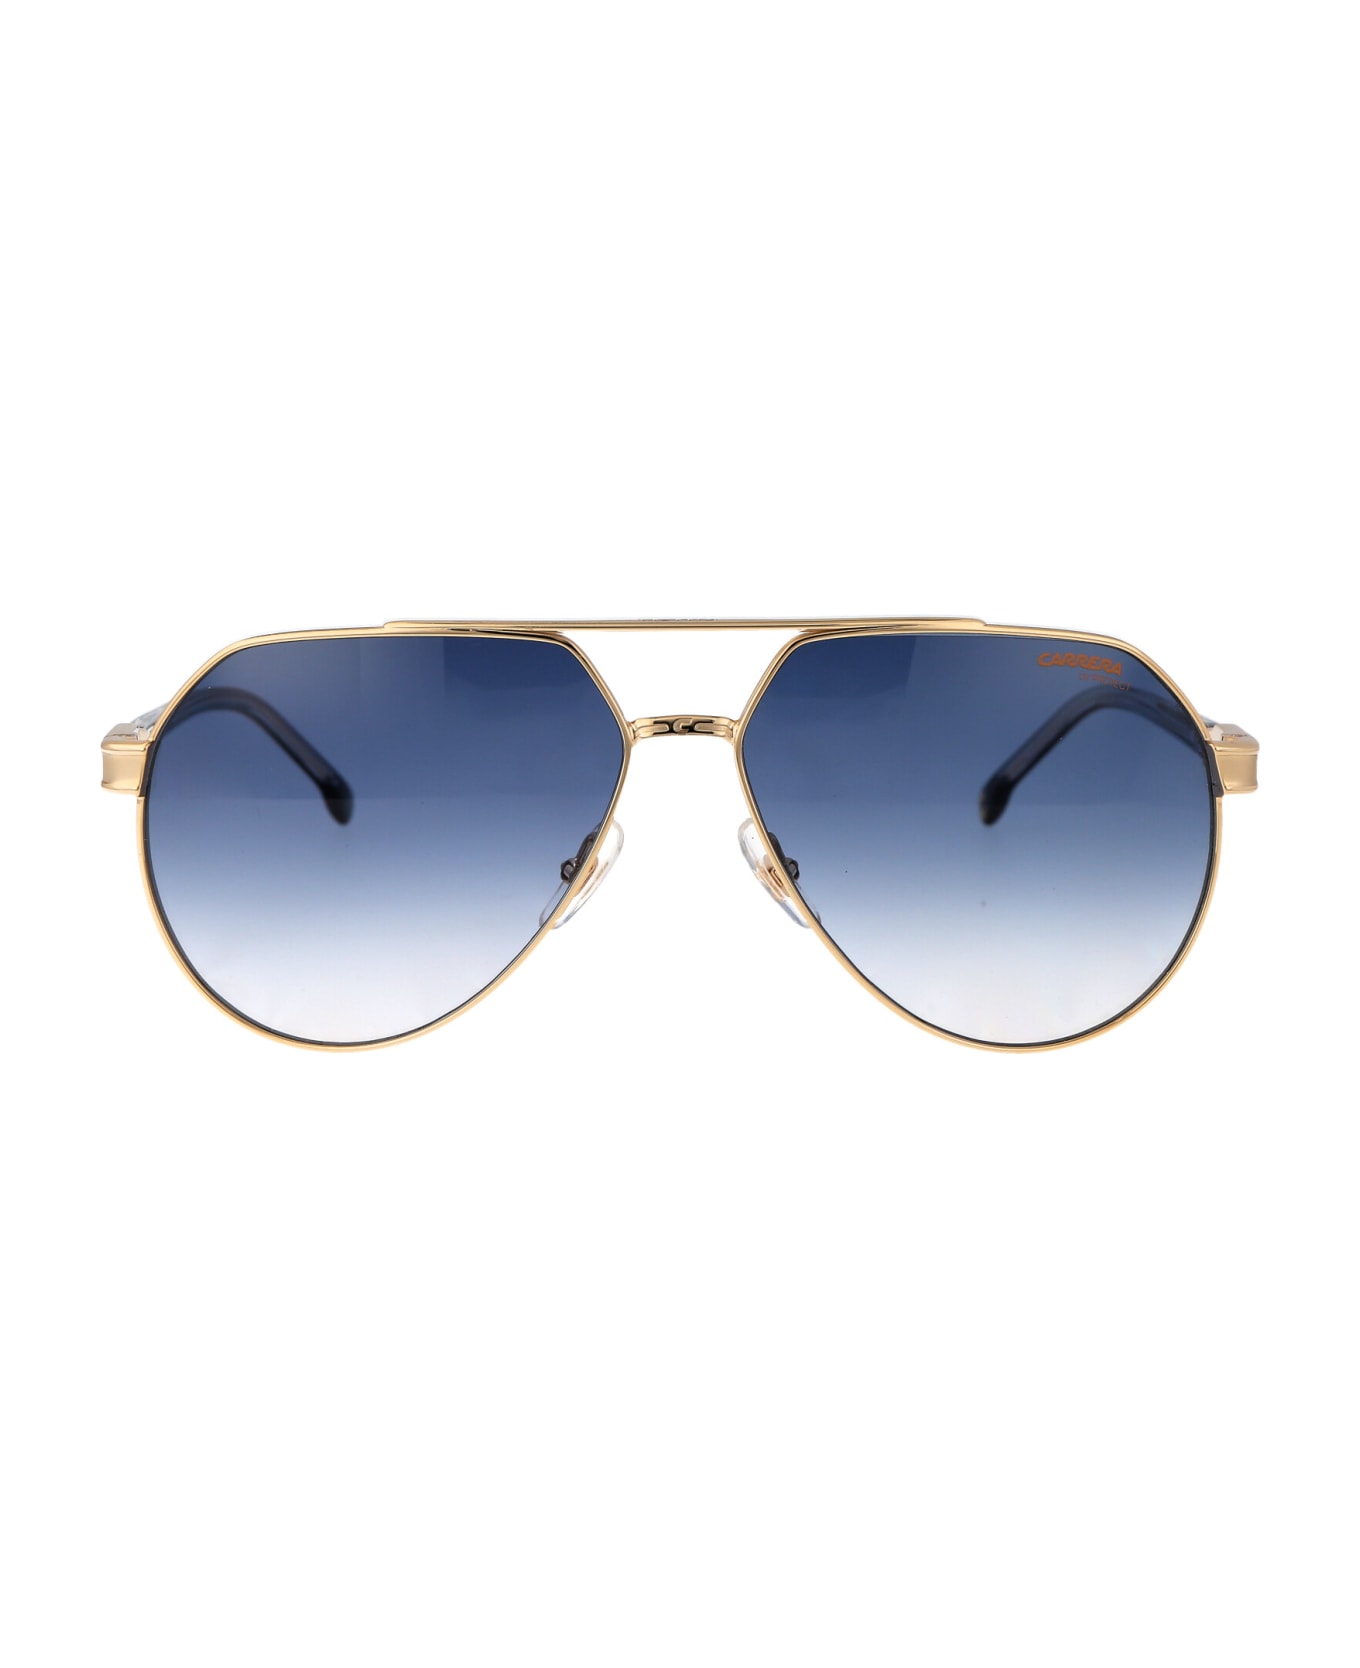 Carrera 1067/s Sunglasses - J5G08 GOLD